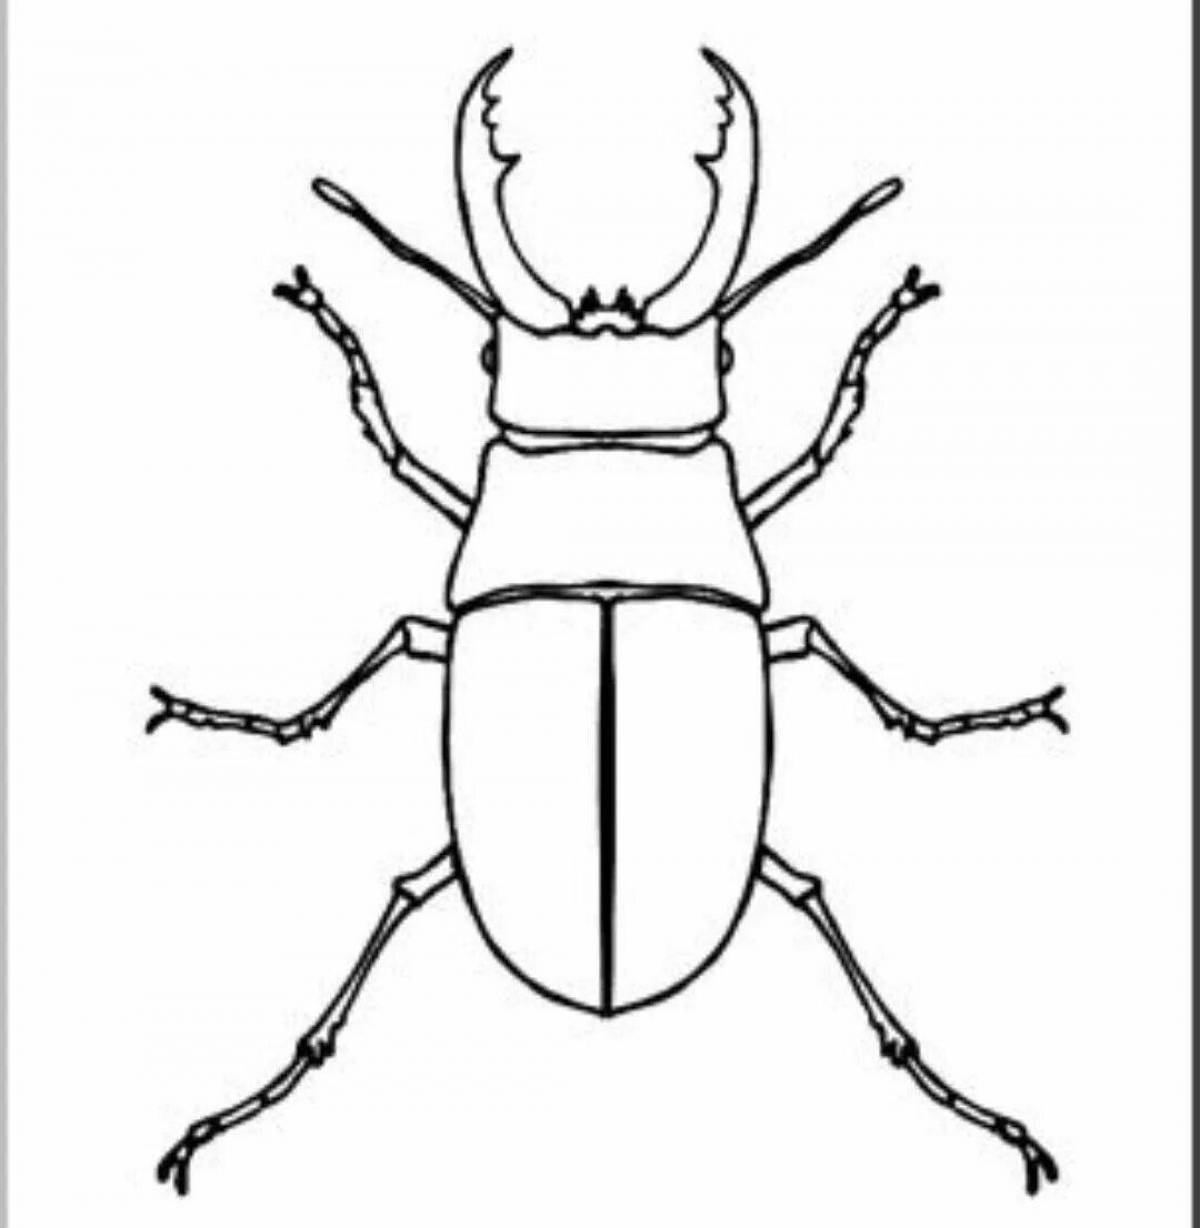 Stag beetle #4